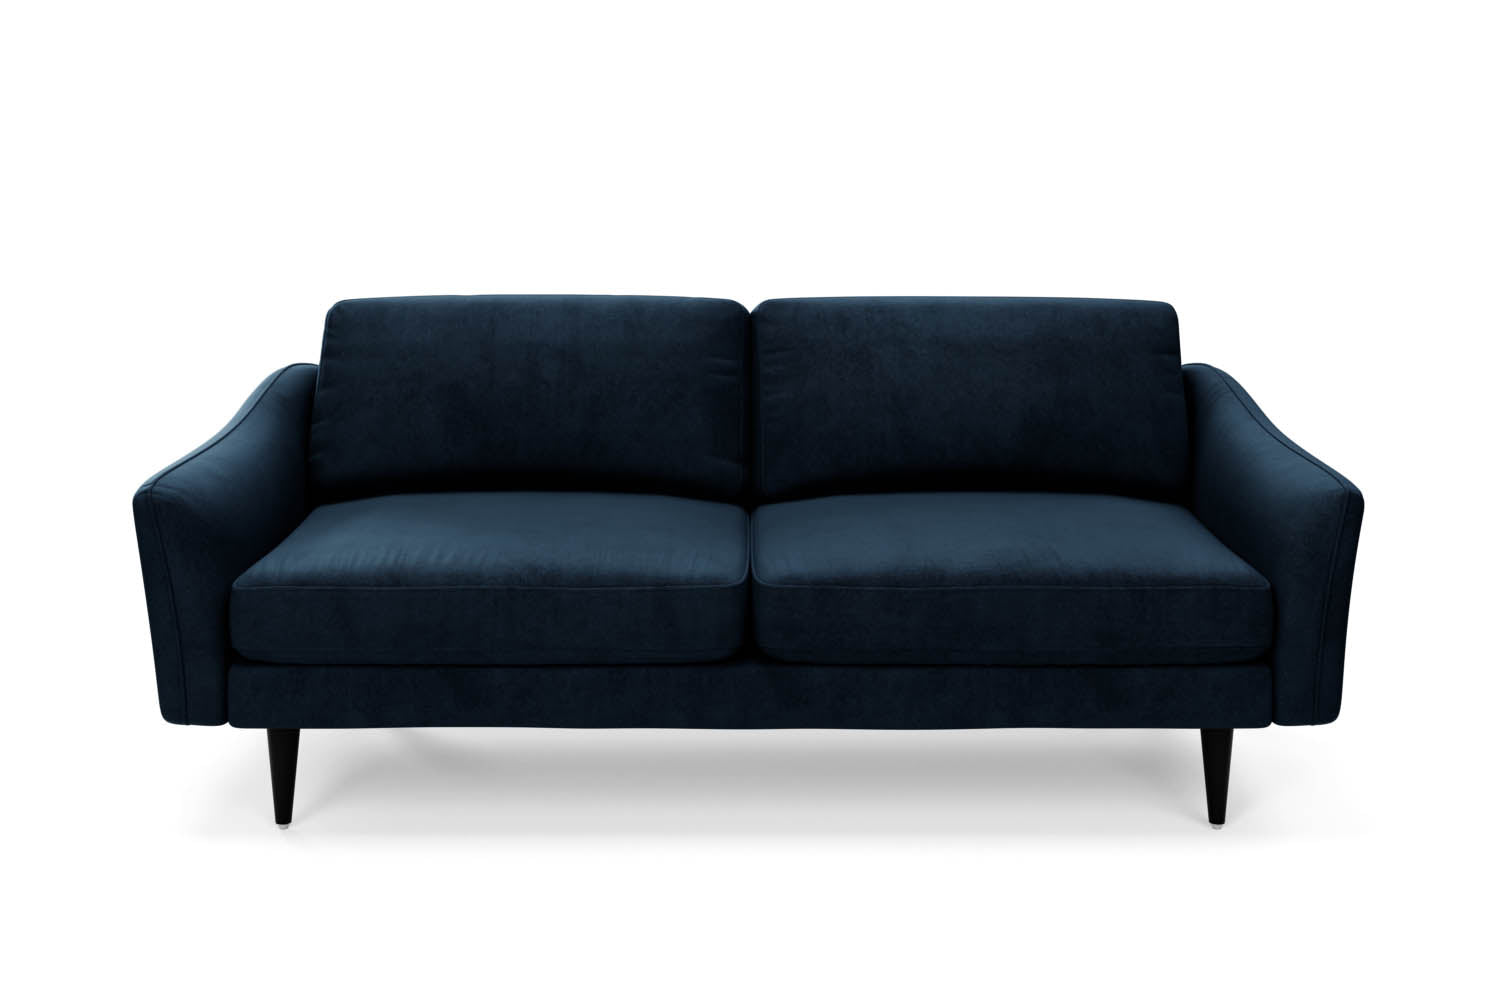 SNUG | The Rebel 3 Seater Sofa in Deep Blue variant_40837173903408